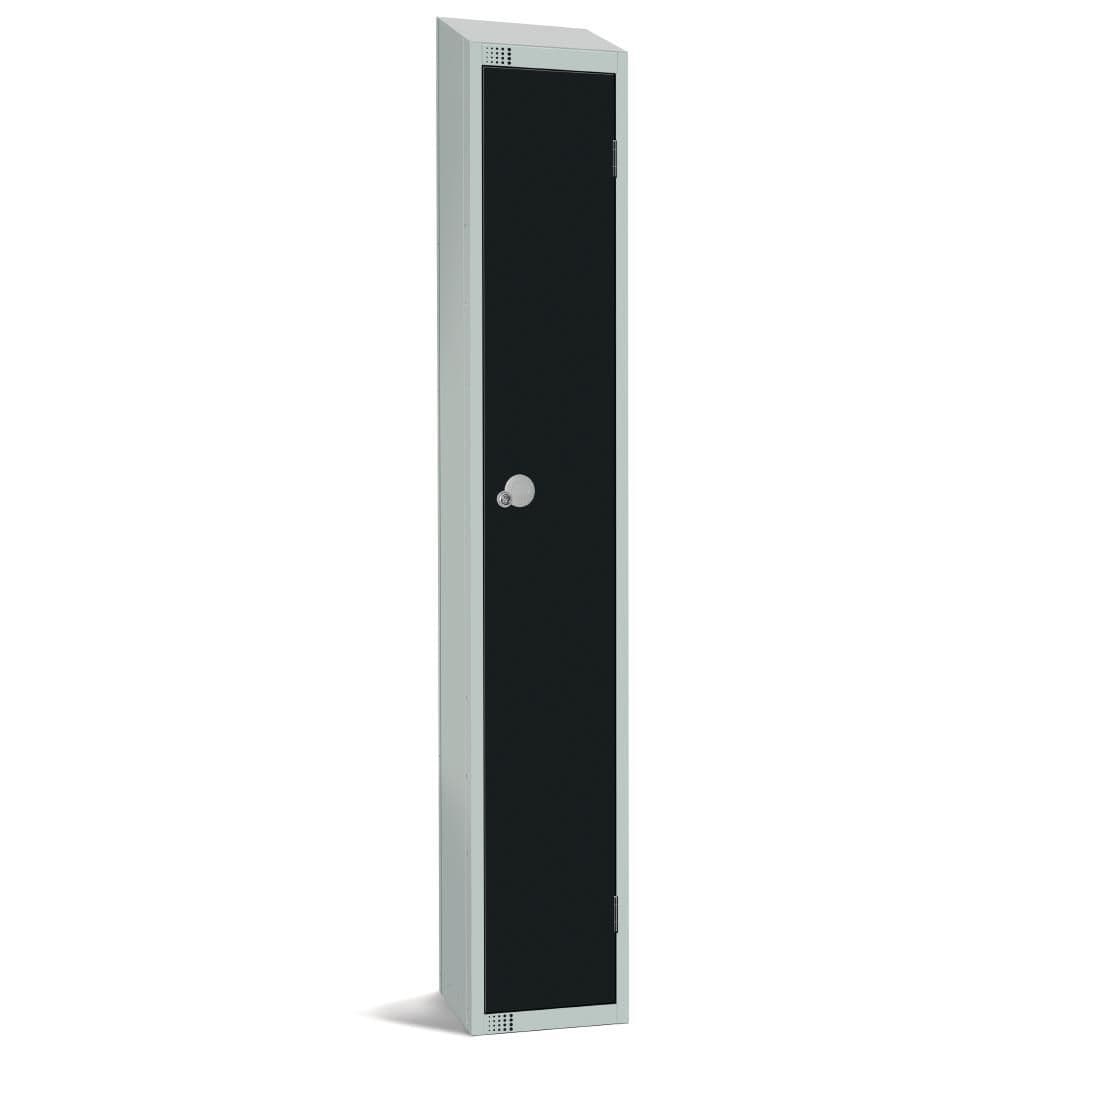 GR670-CS Elite Single Door Camlock Locker with Sloping Top Black JD Catering Equipment Solutions Ltd